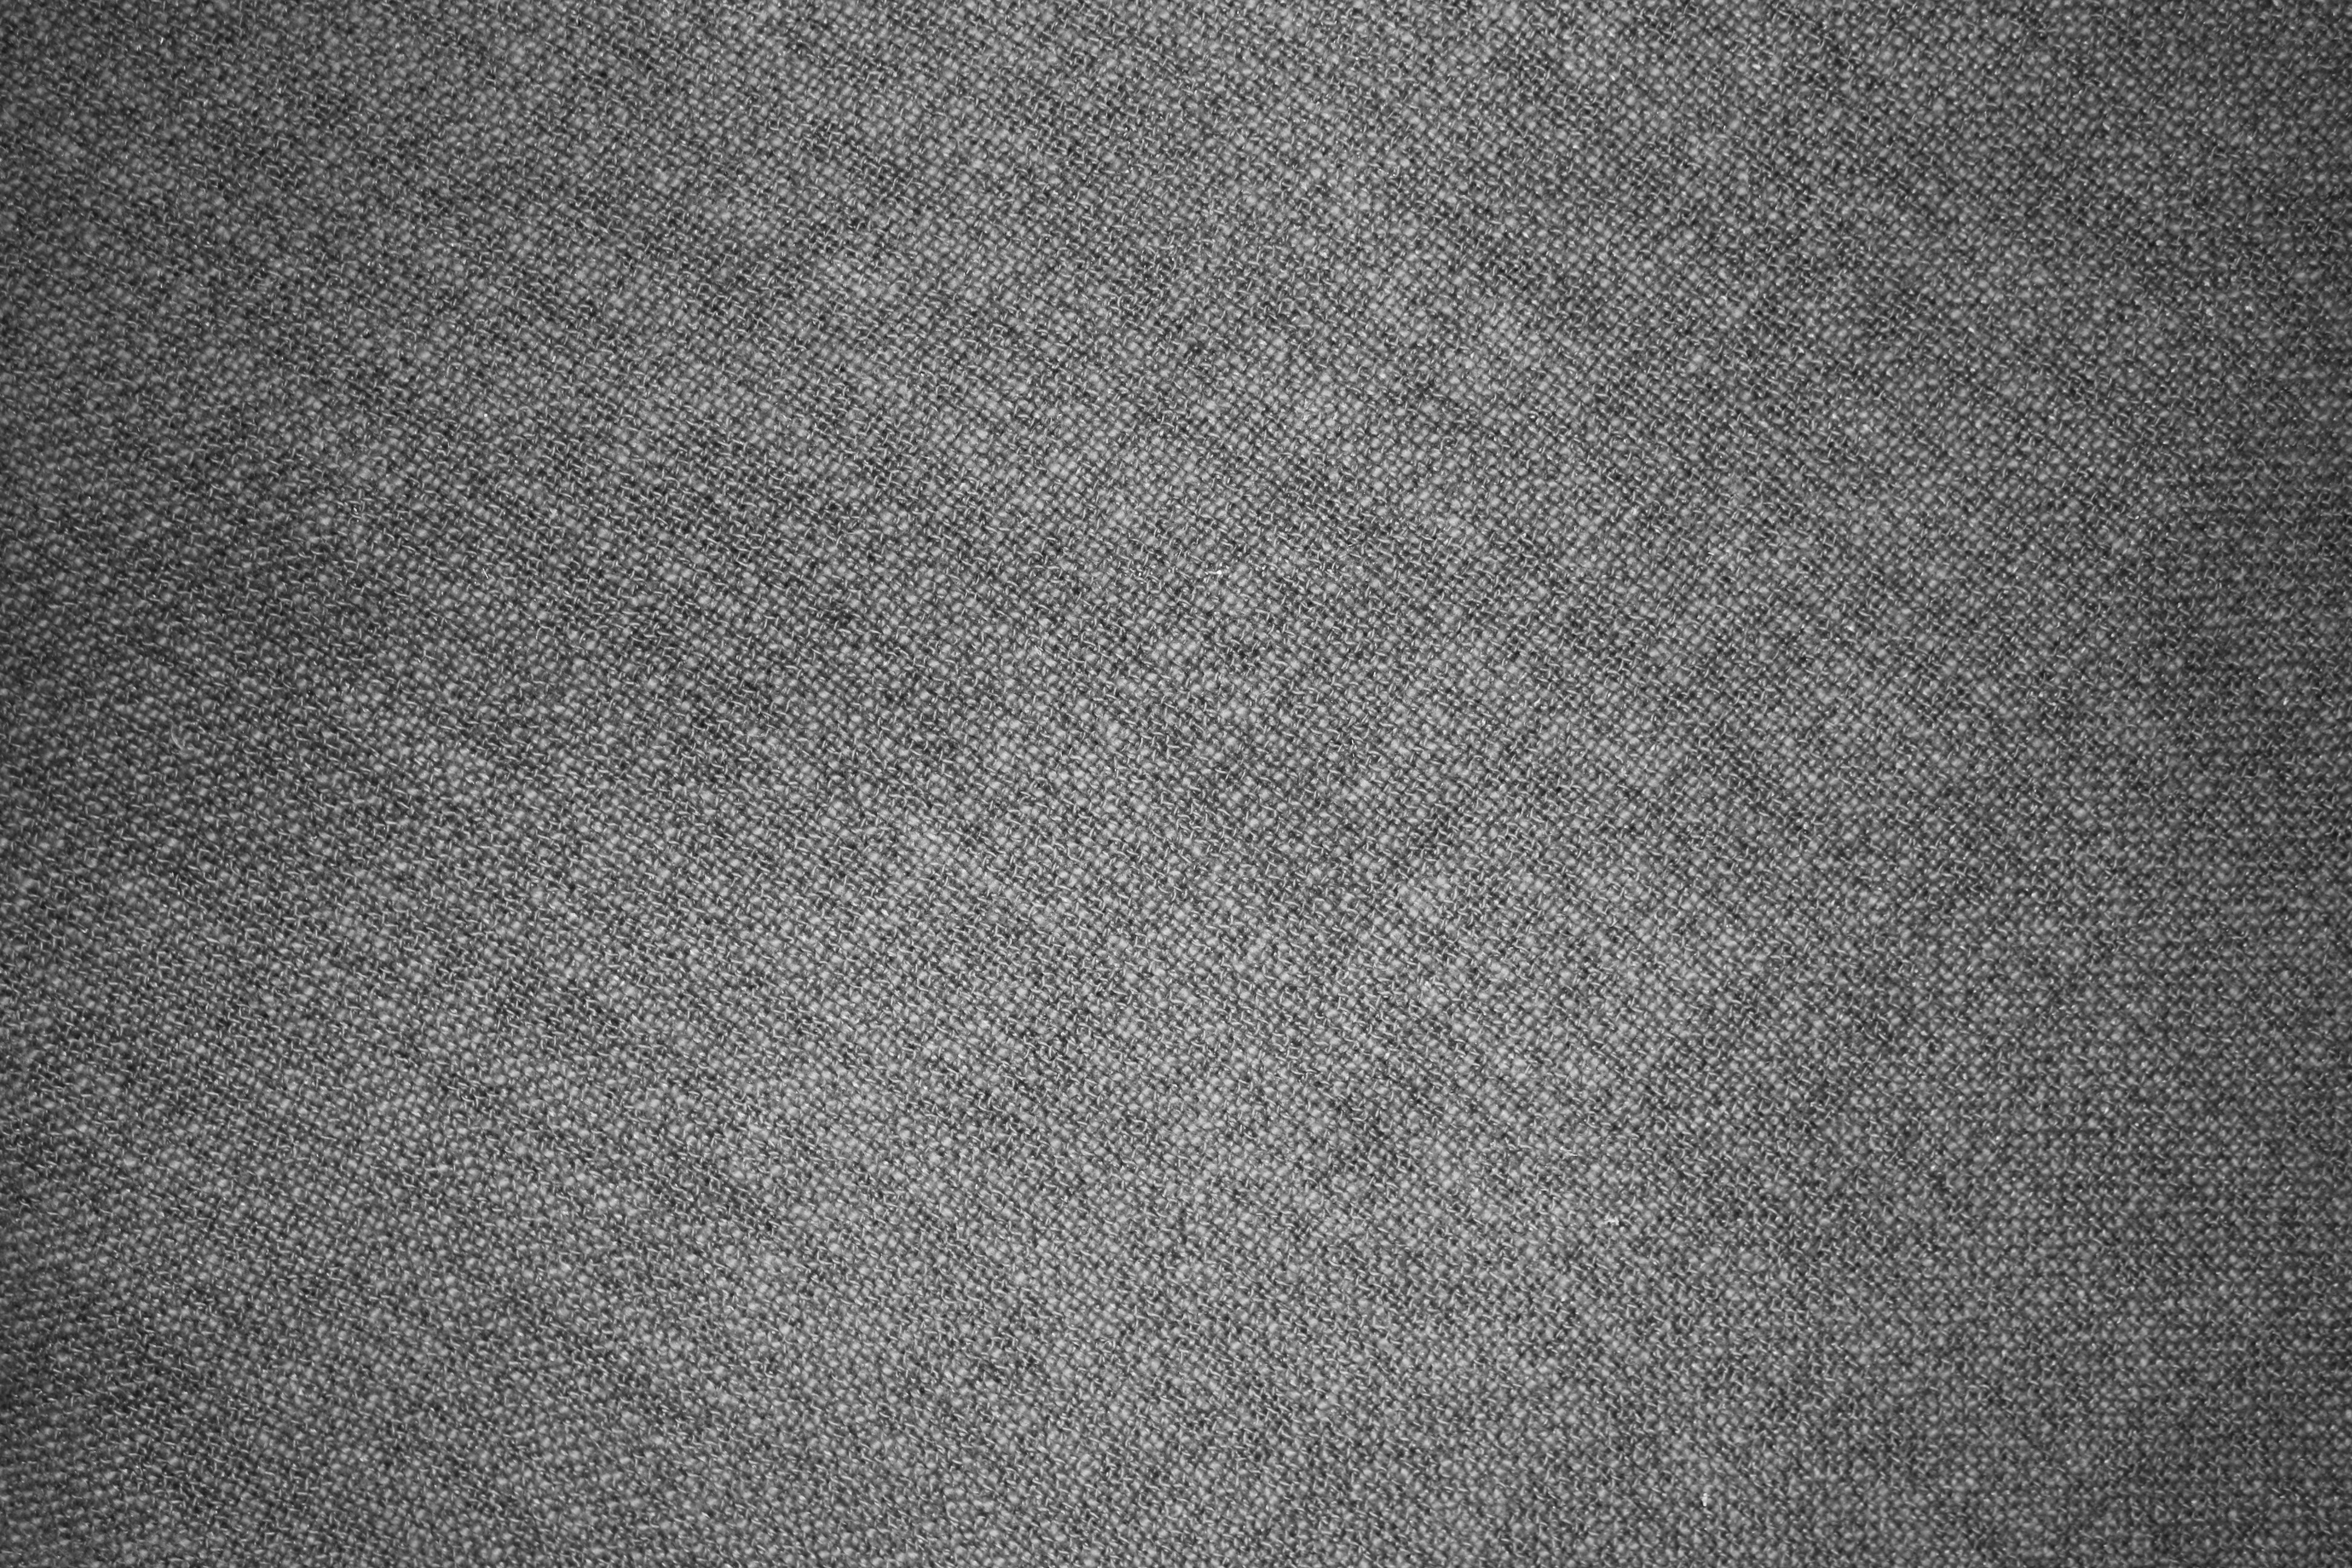 Gray Fabric Texture Picture Free Photograph Photos Public Domain